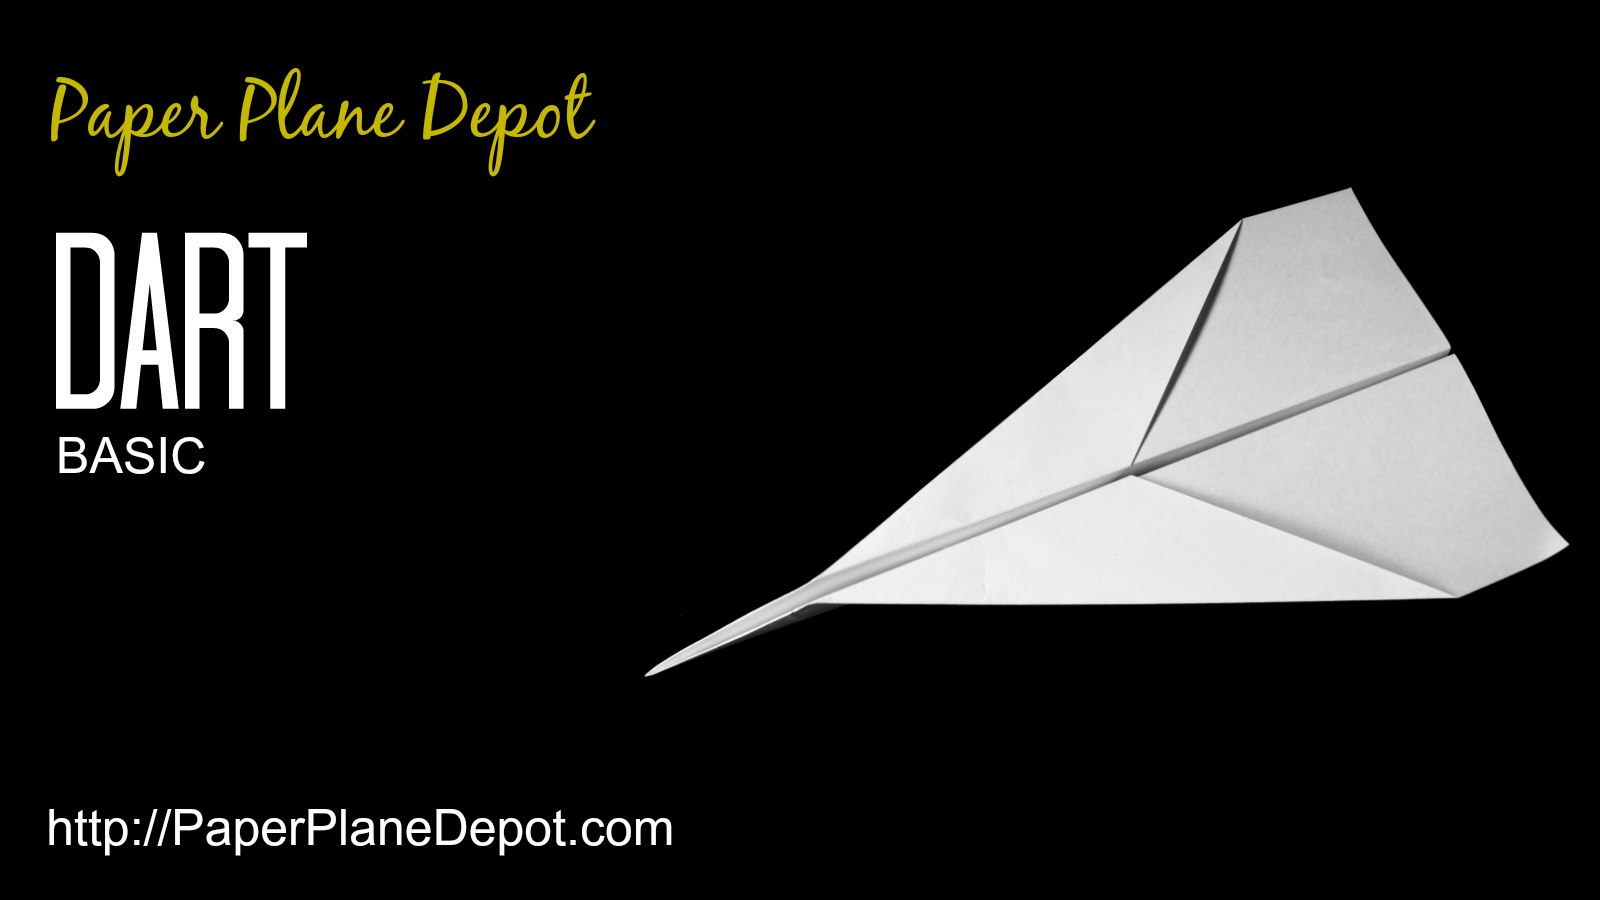 basic-dart-paper-plane-depot